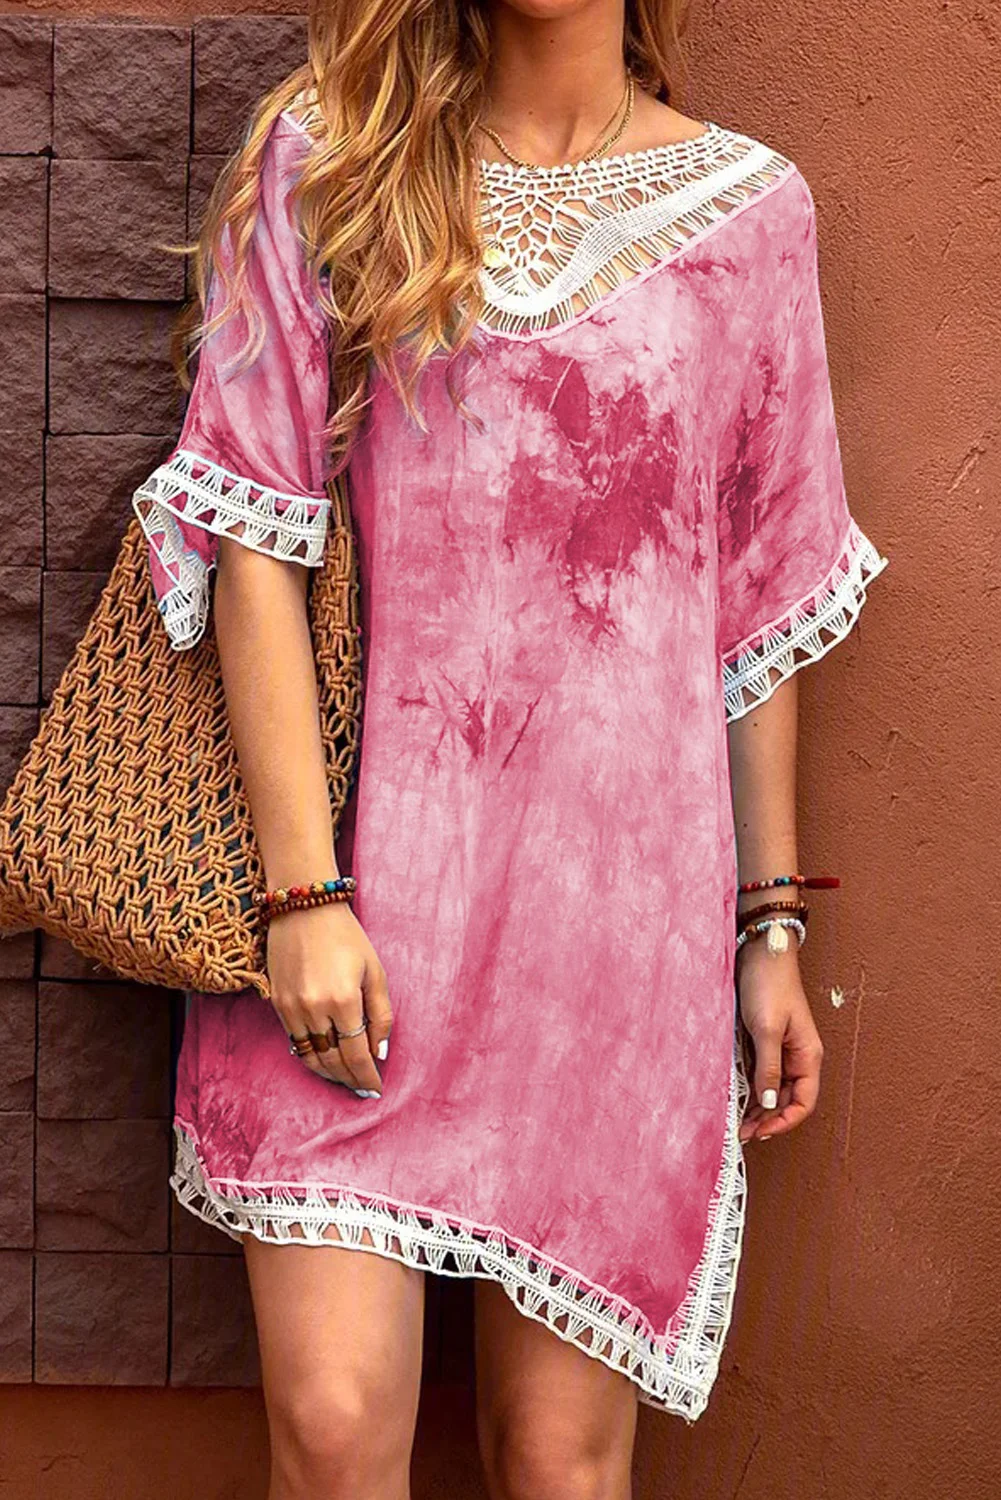 Pink Crochet Tie-dye Beach Dress | IFYHOME